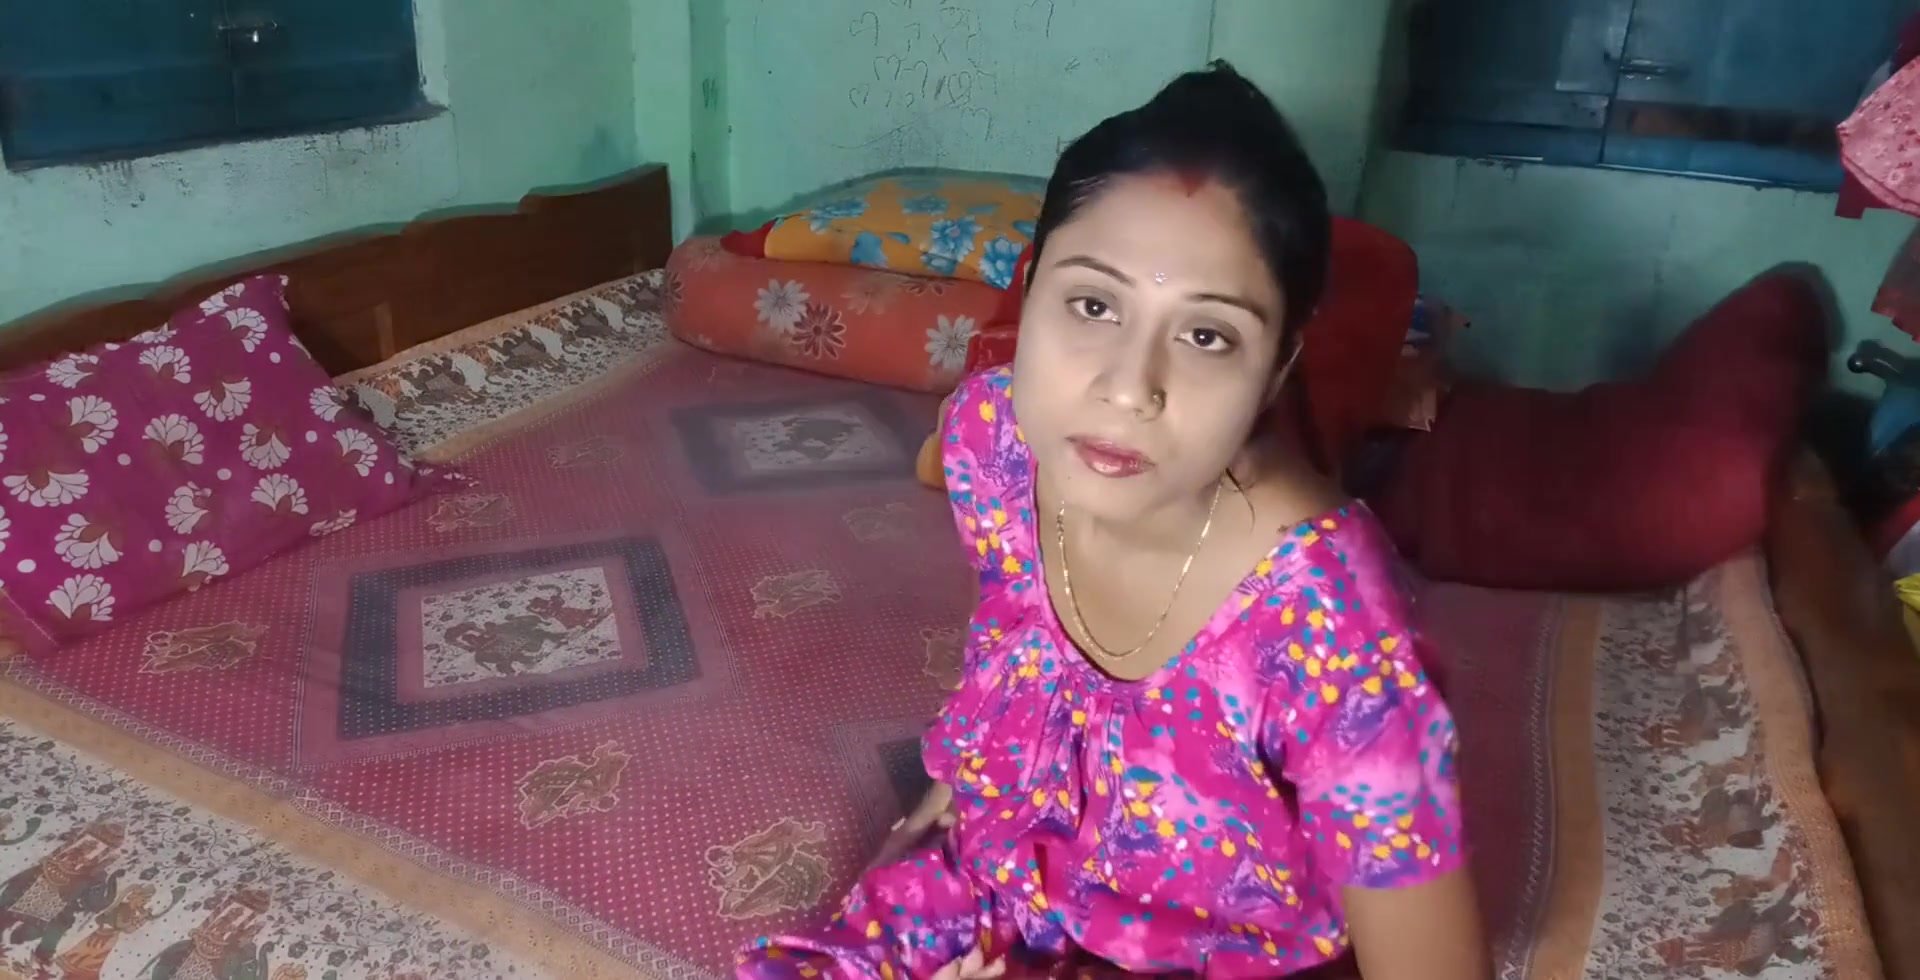 Kolkatabengalixxxvideo - Bengali Kolkata boudi Love making Video with Hubby 4K - ThisVid.com